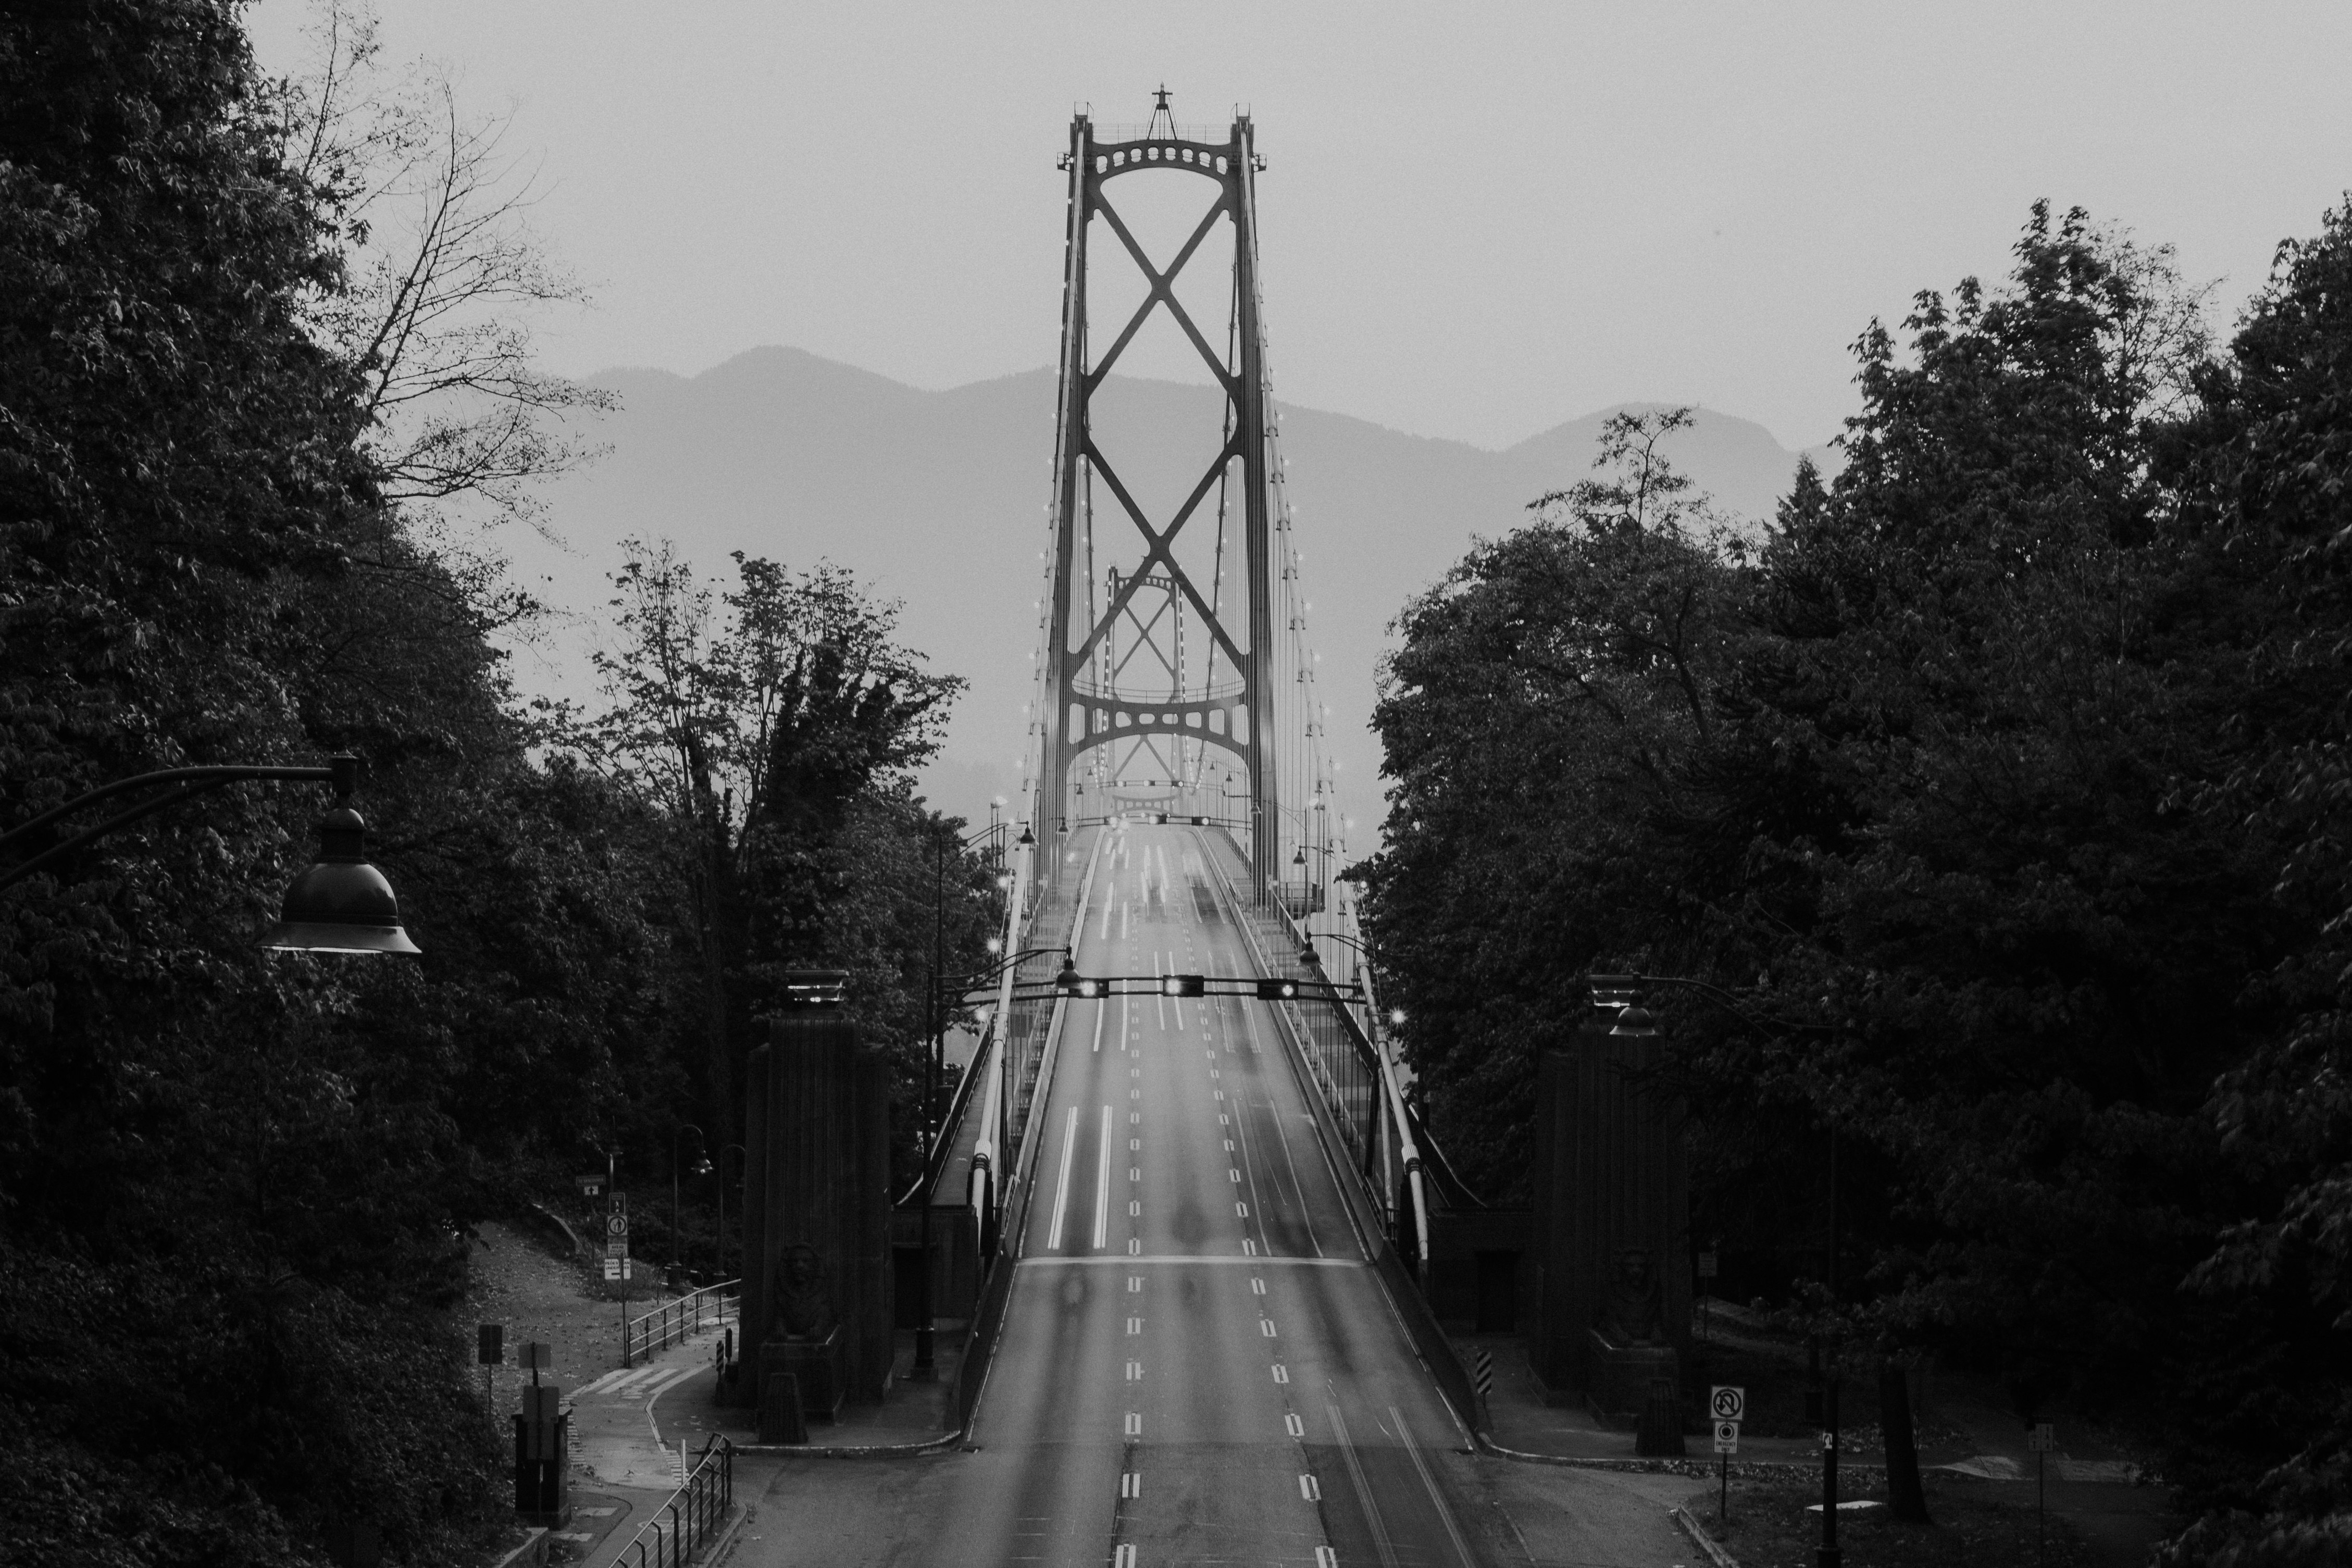 grayscale photography of suspension bridge